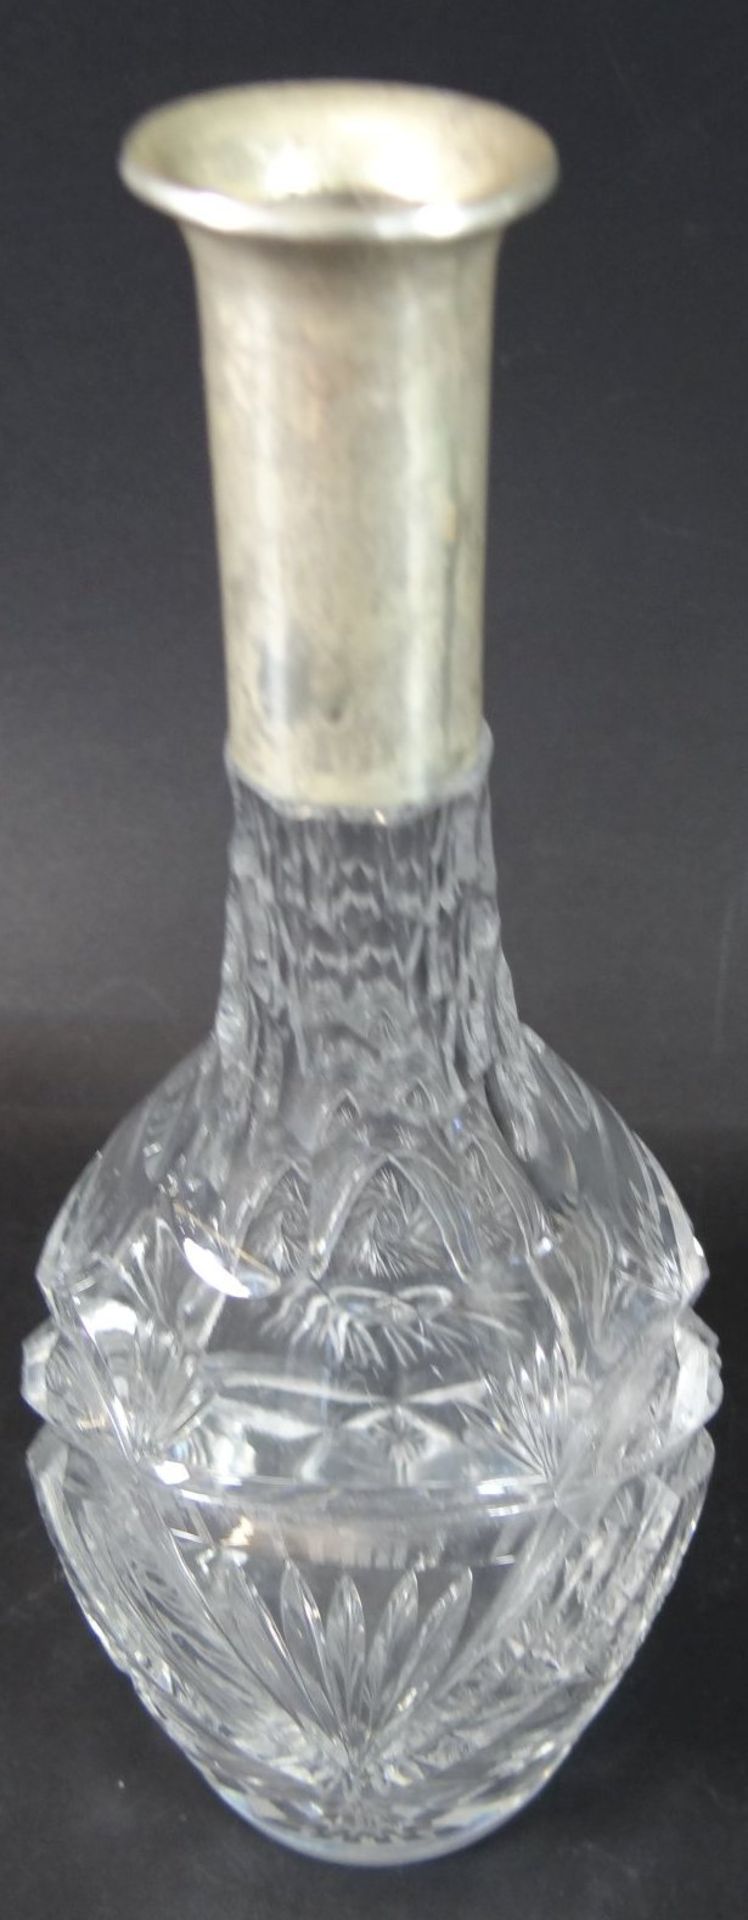 kl. Kristallkaraffe mit Silberhals-800-, H-20 cm, Stöpsel fehl - Bild 2 aus 3